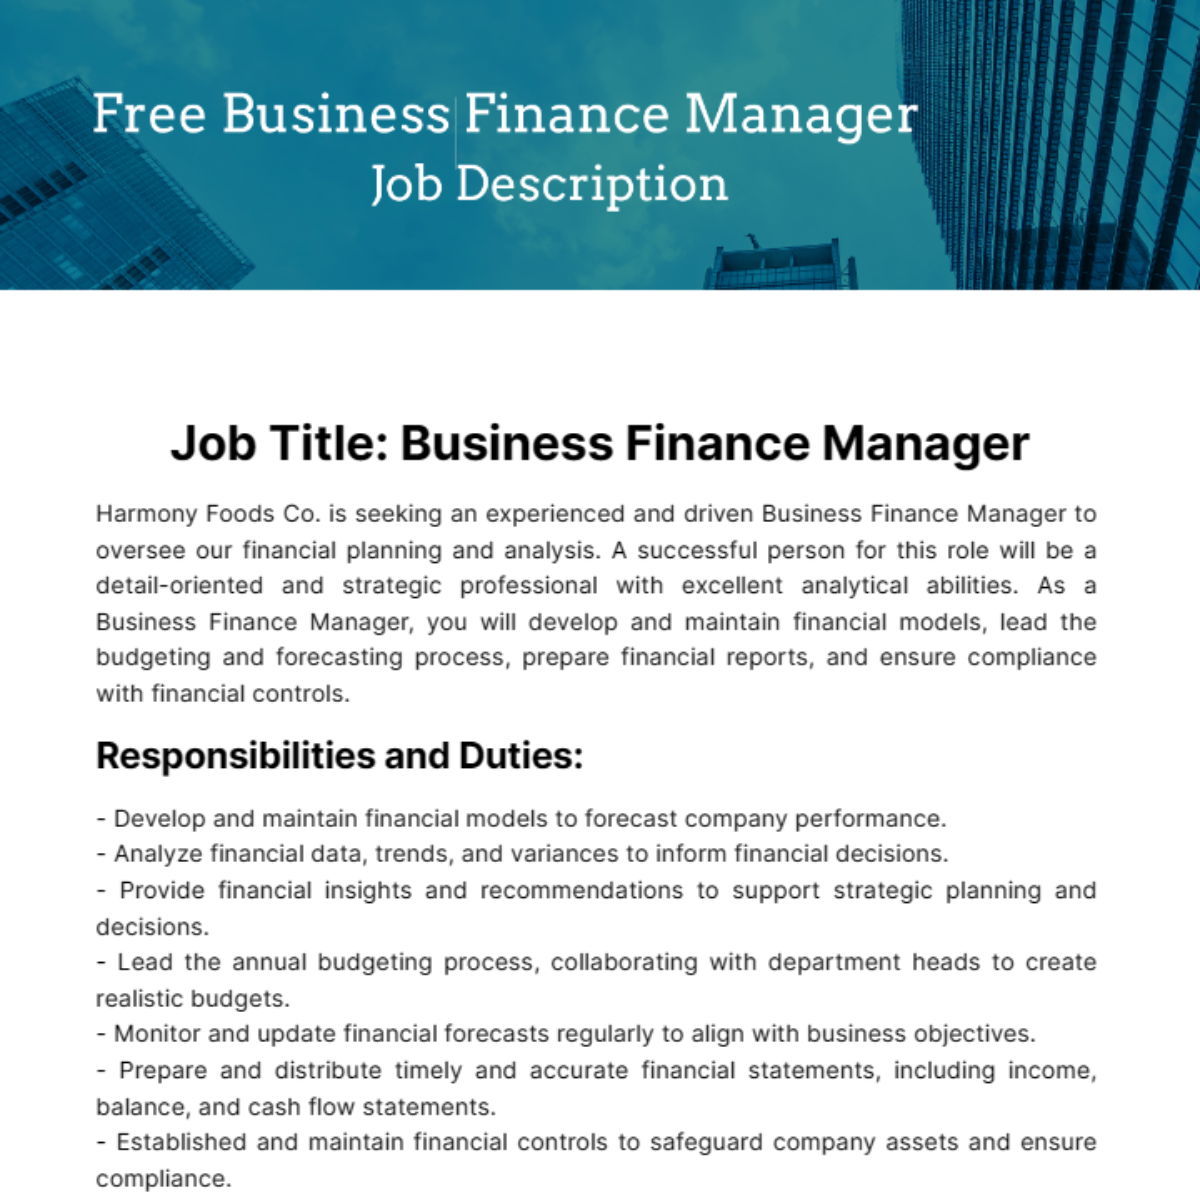 Free Business Finance Manager Job Description Template